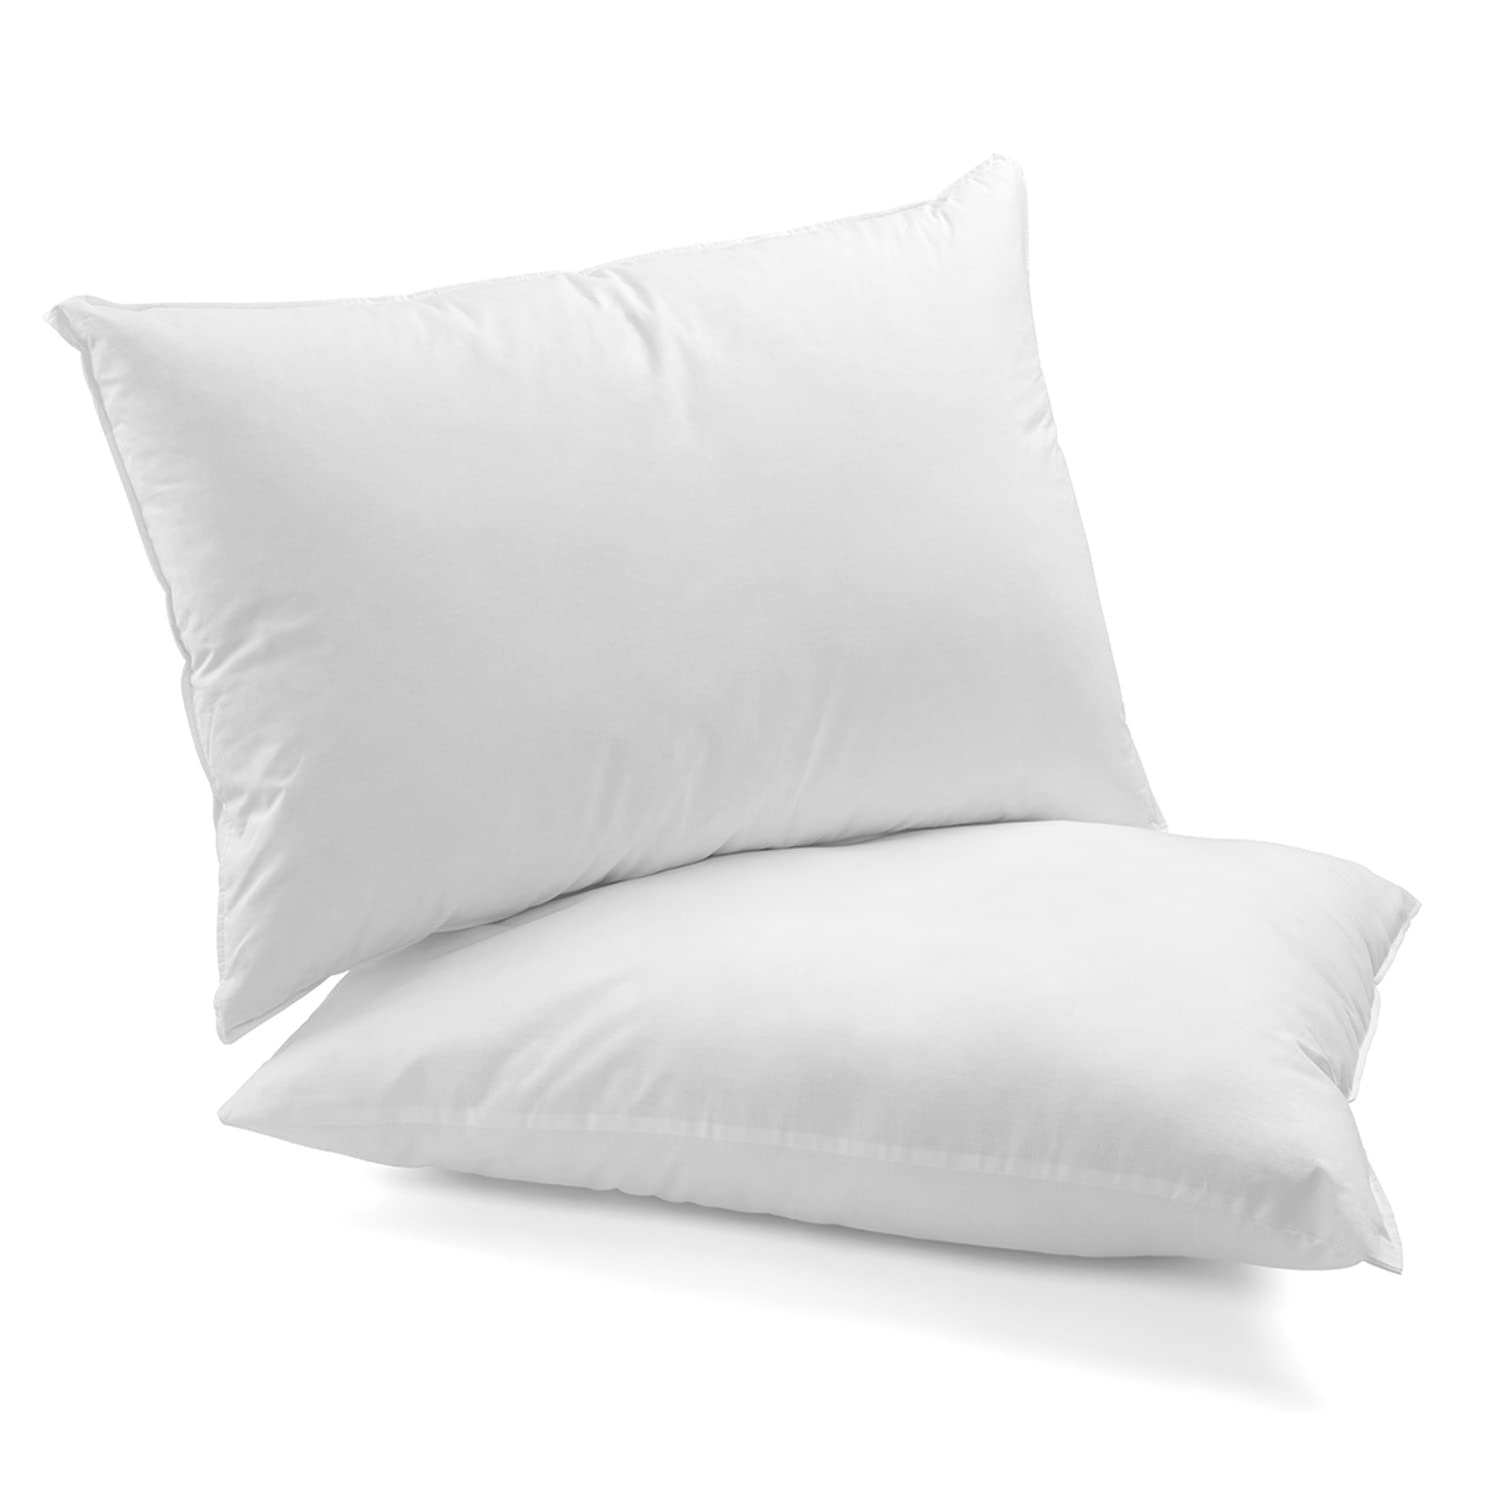 Sleepsia Premium Microfiber Pillow